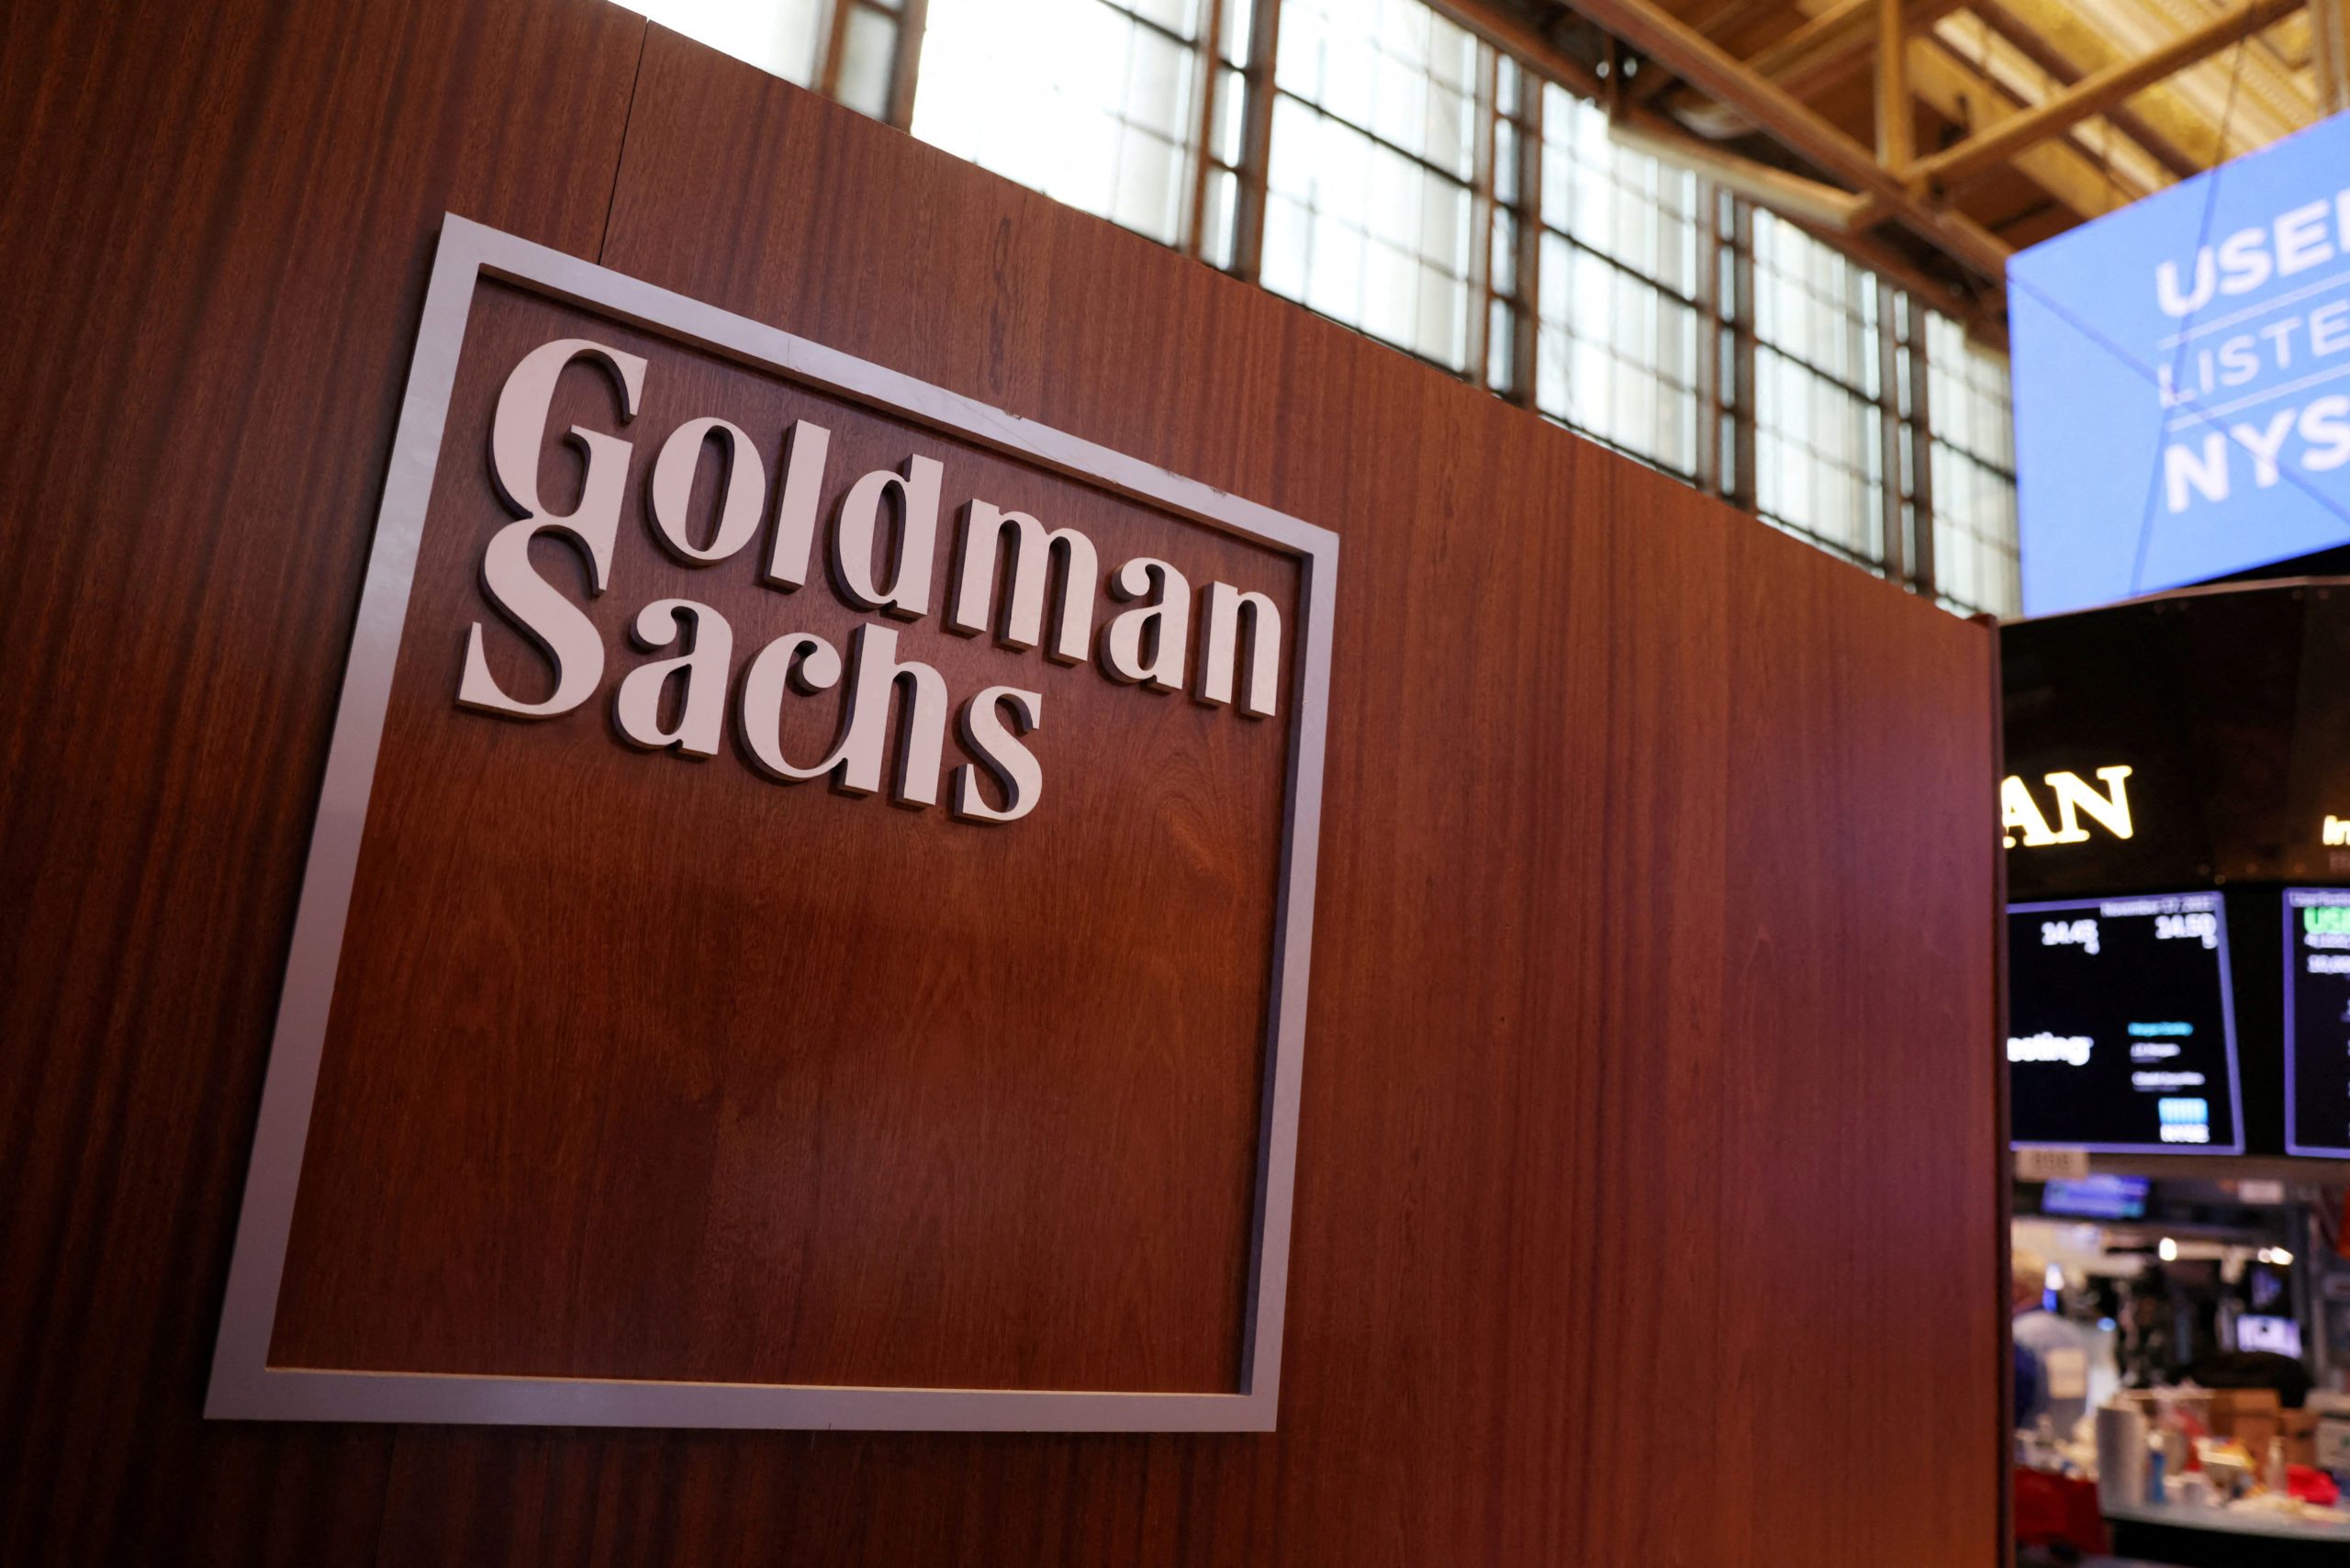 Malaysia may sue Goldman Sachs over multi-billion-dollar 1MDB scandal